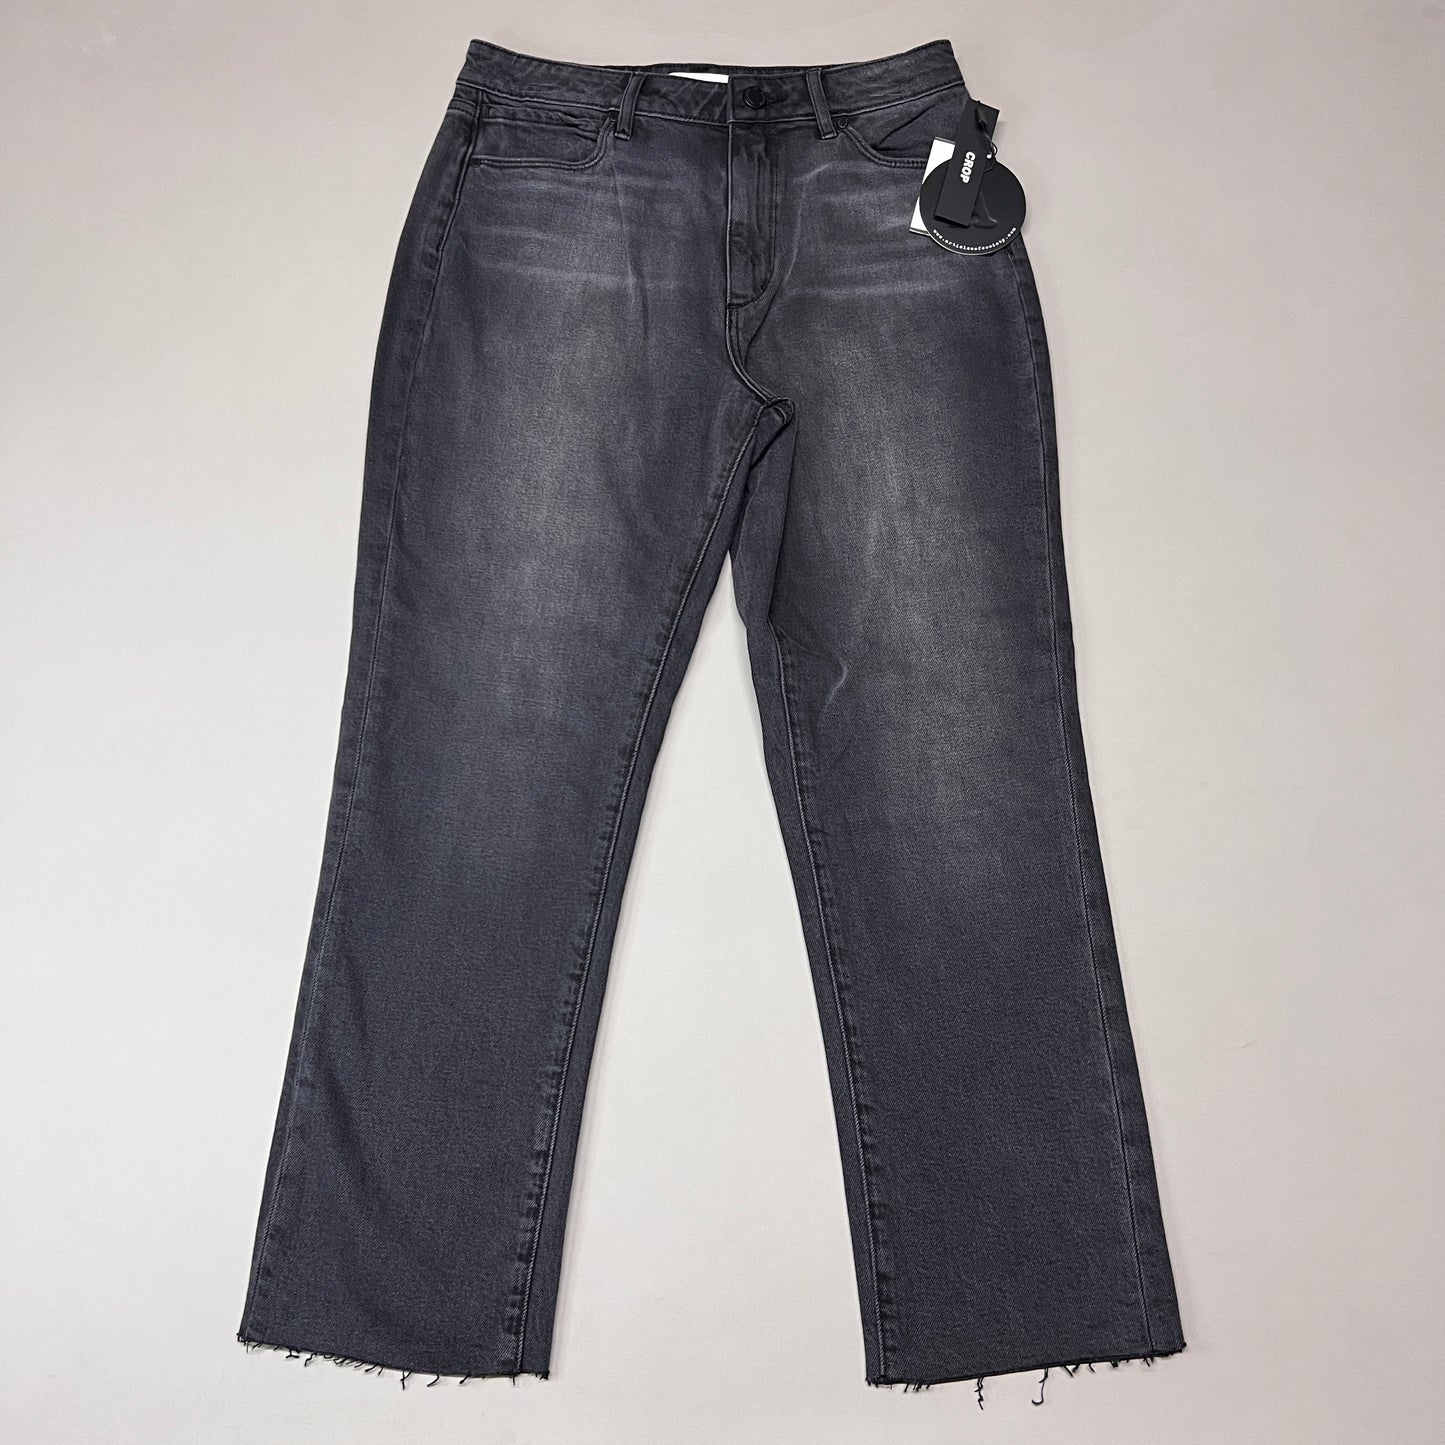 ARTICLES OF SOCIETY Kate Eleele Raw Hem Cropped Jeans Women's Sz 27 Black 4810TQB-720 (New)